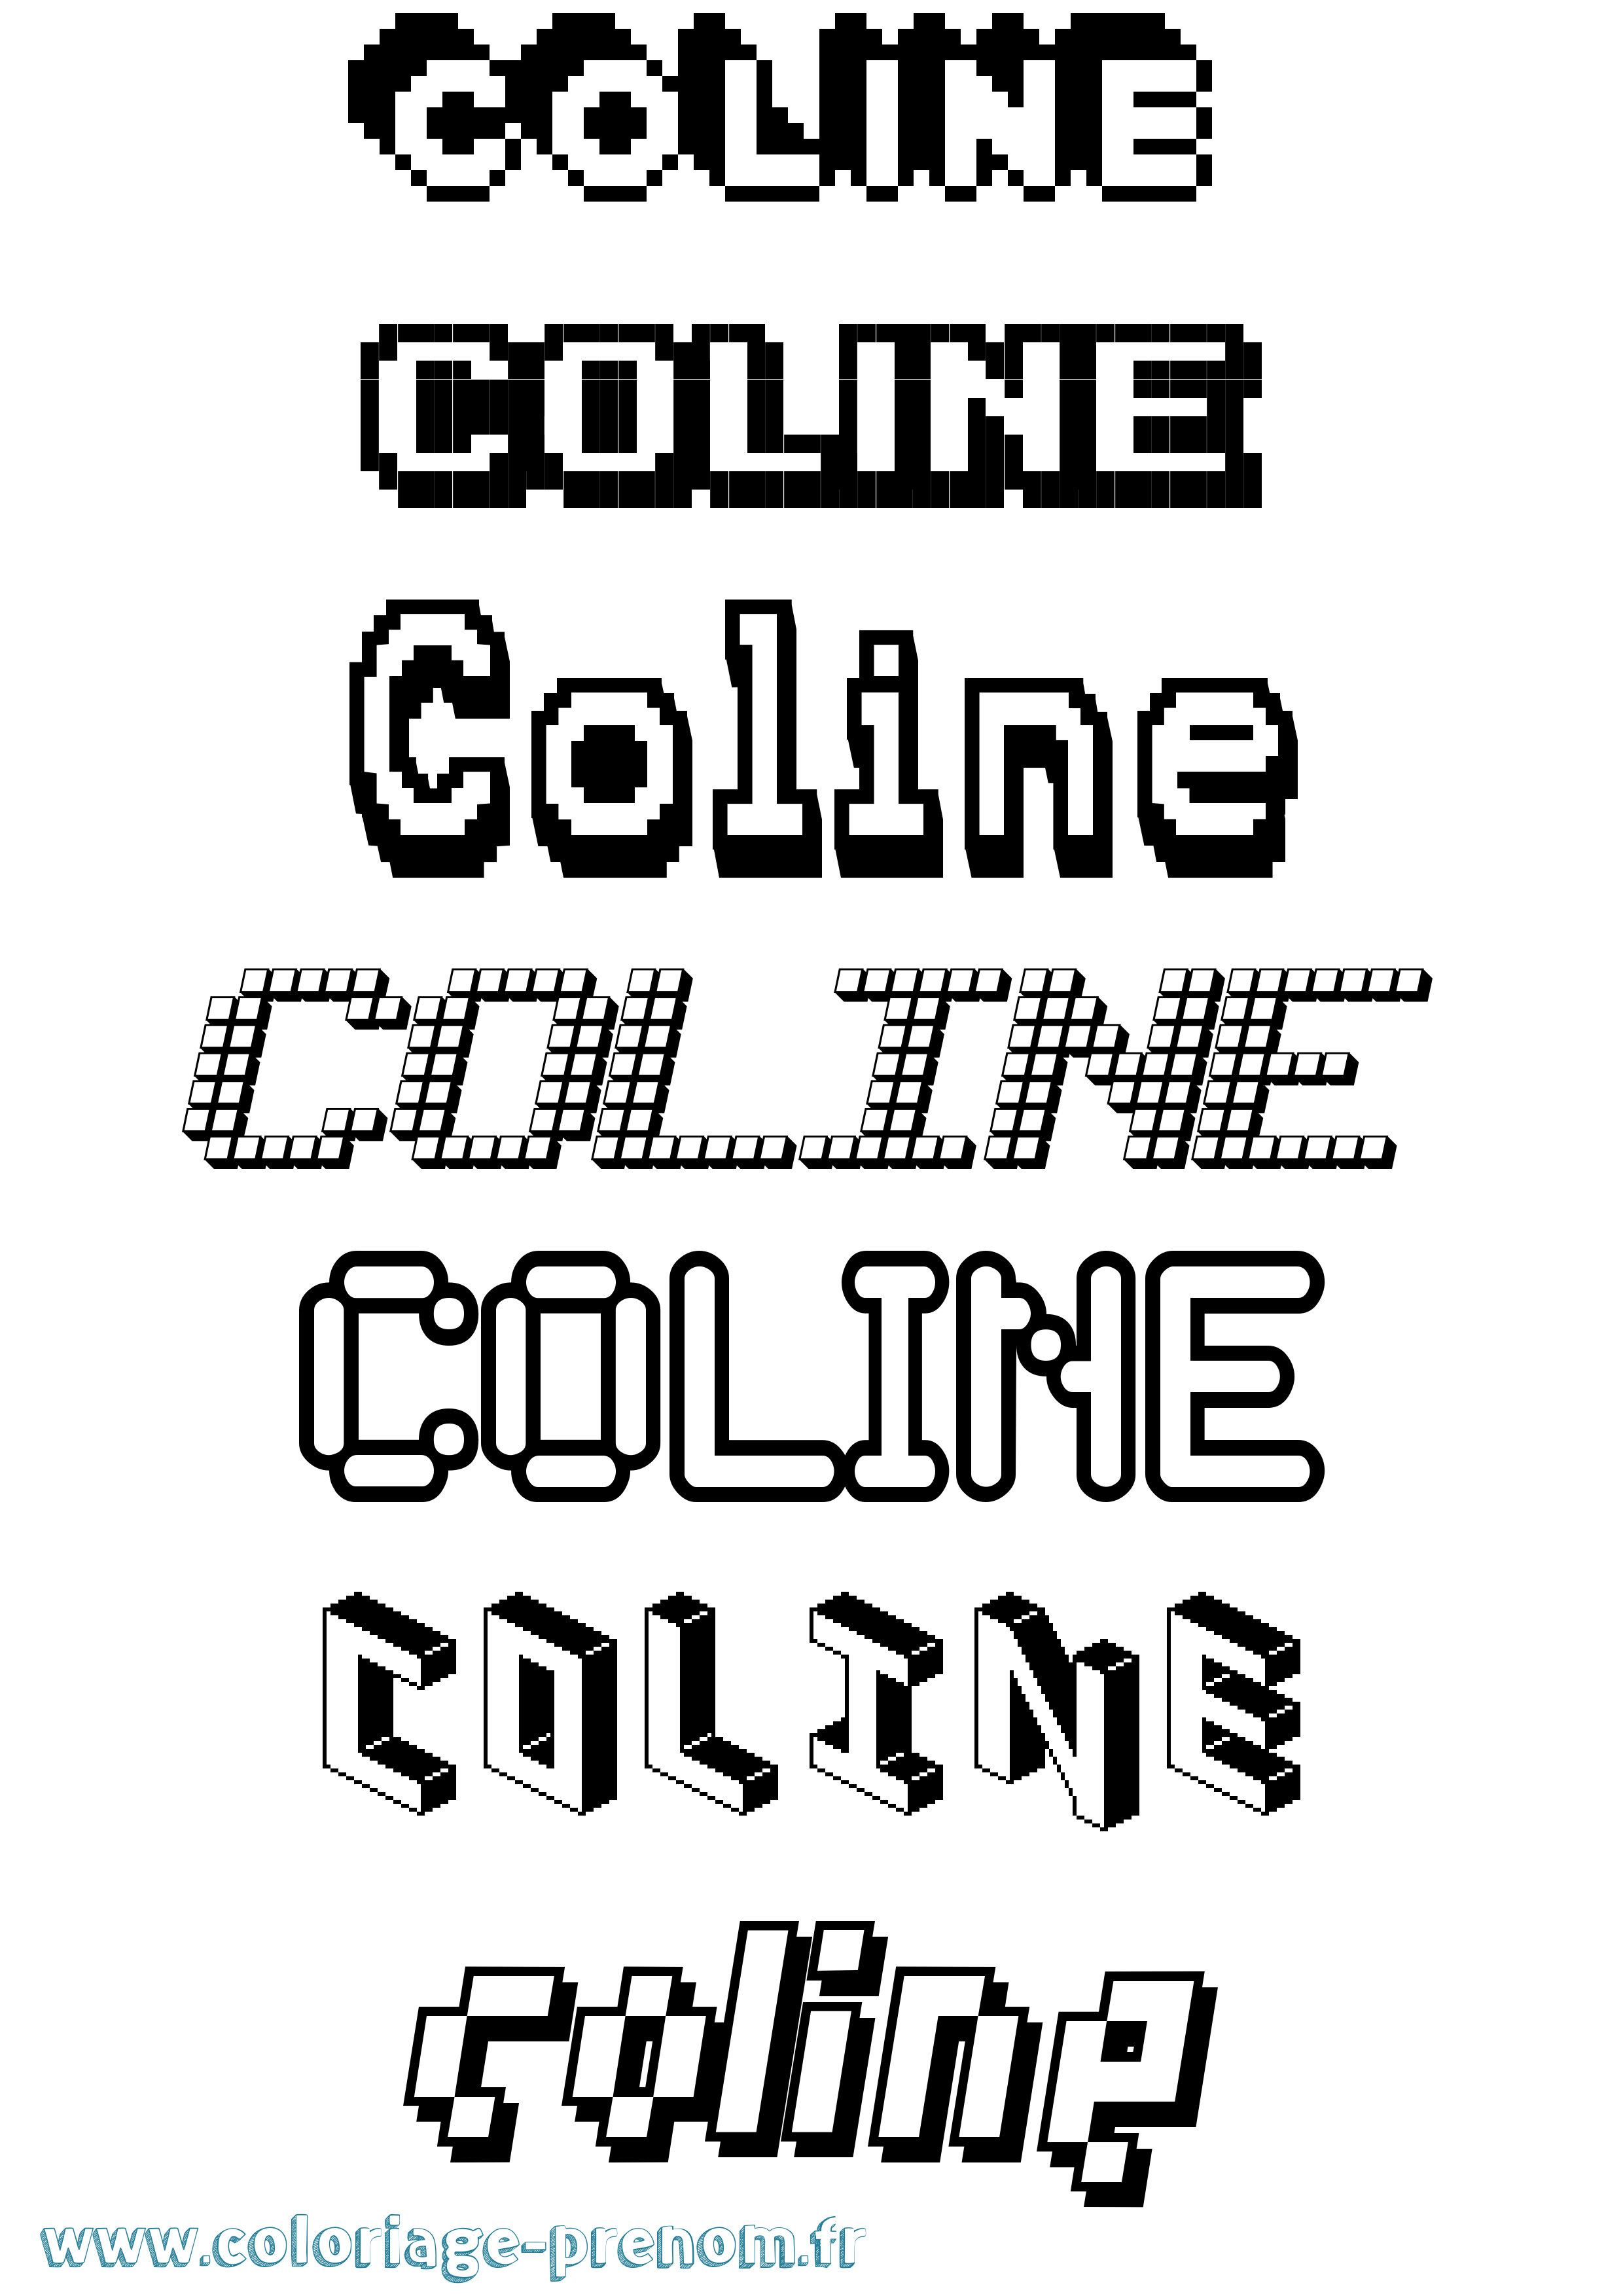 Coloriage prénom Coline Pixel